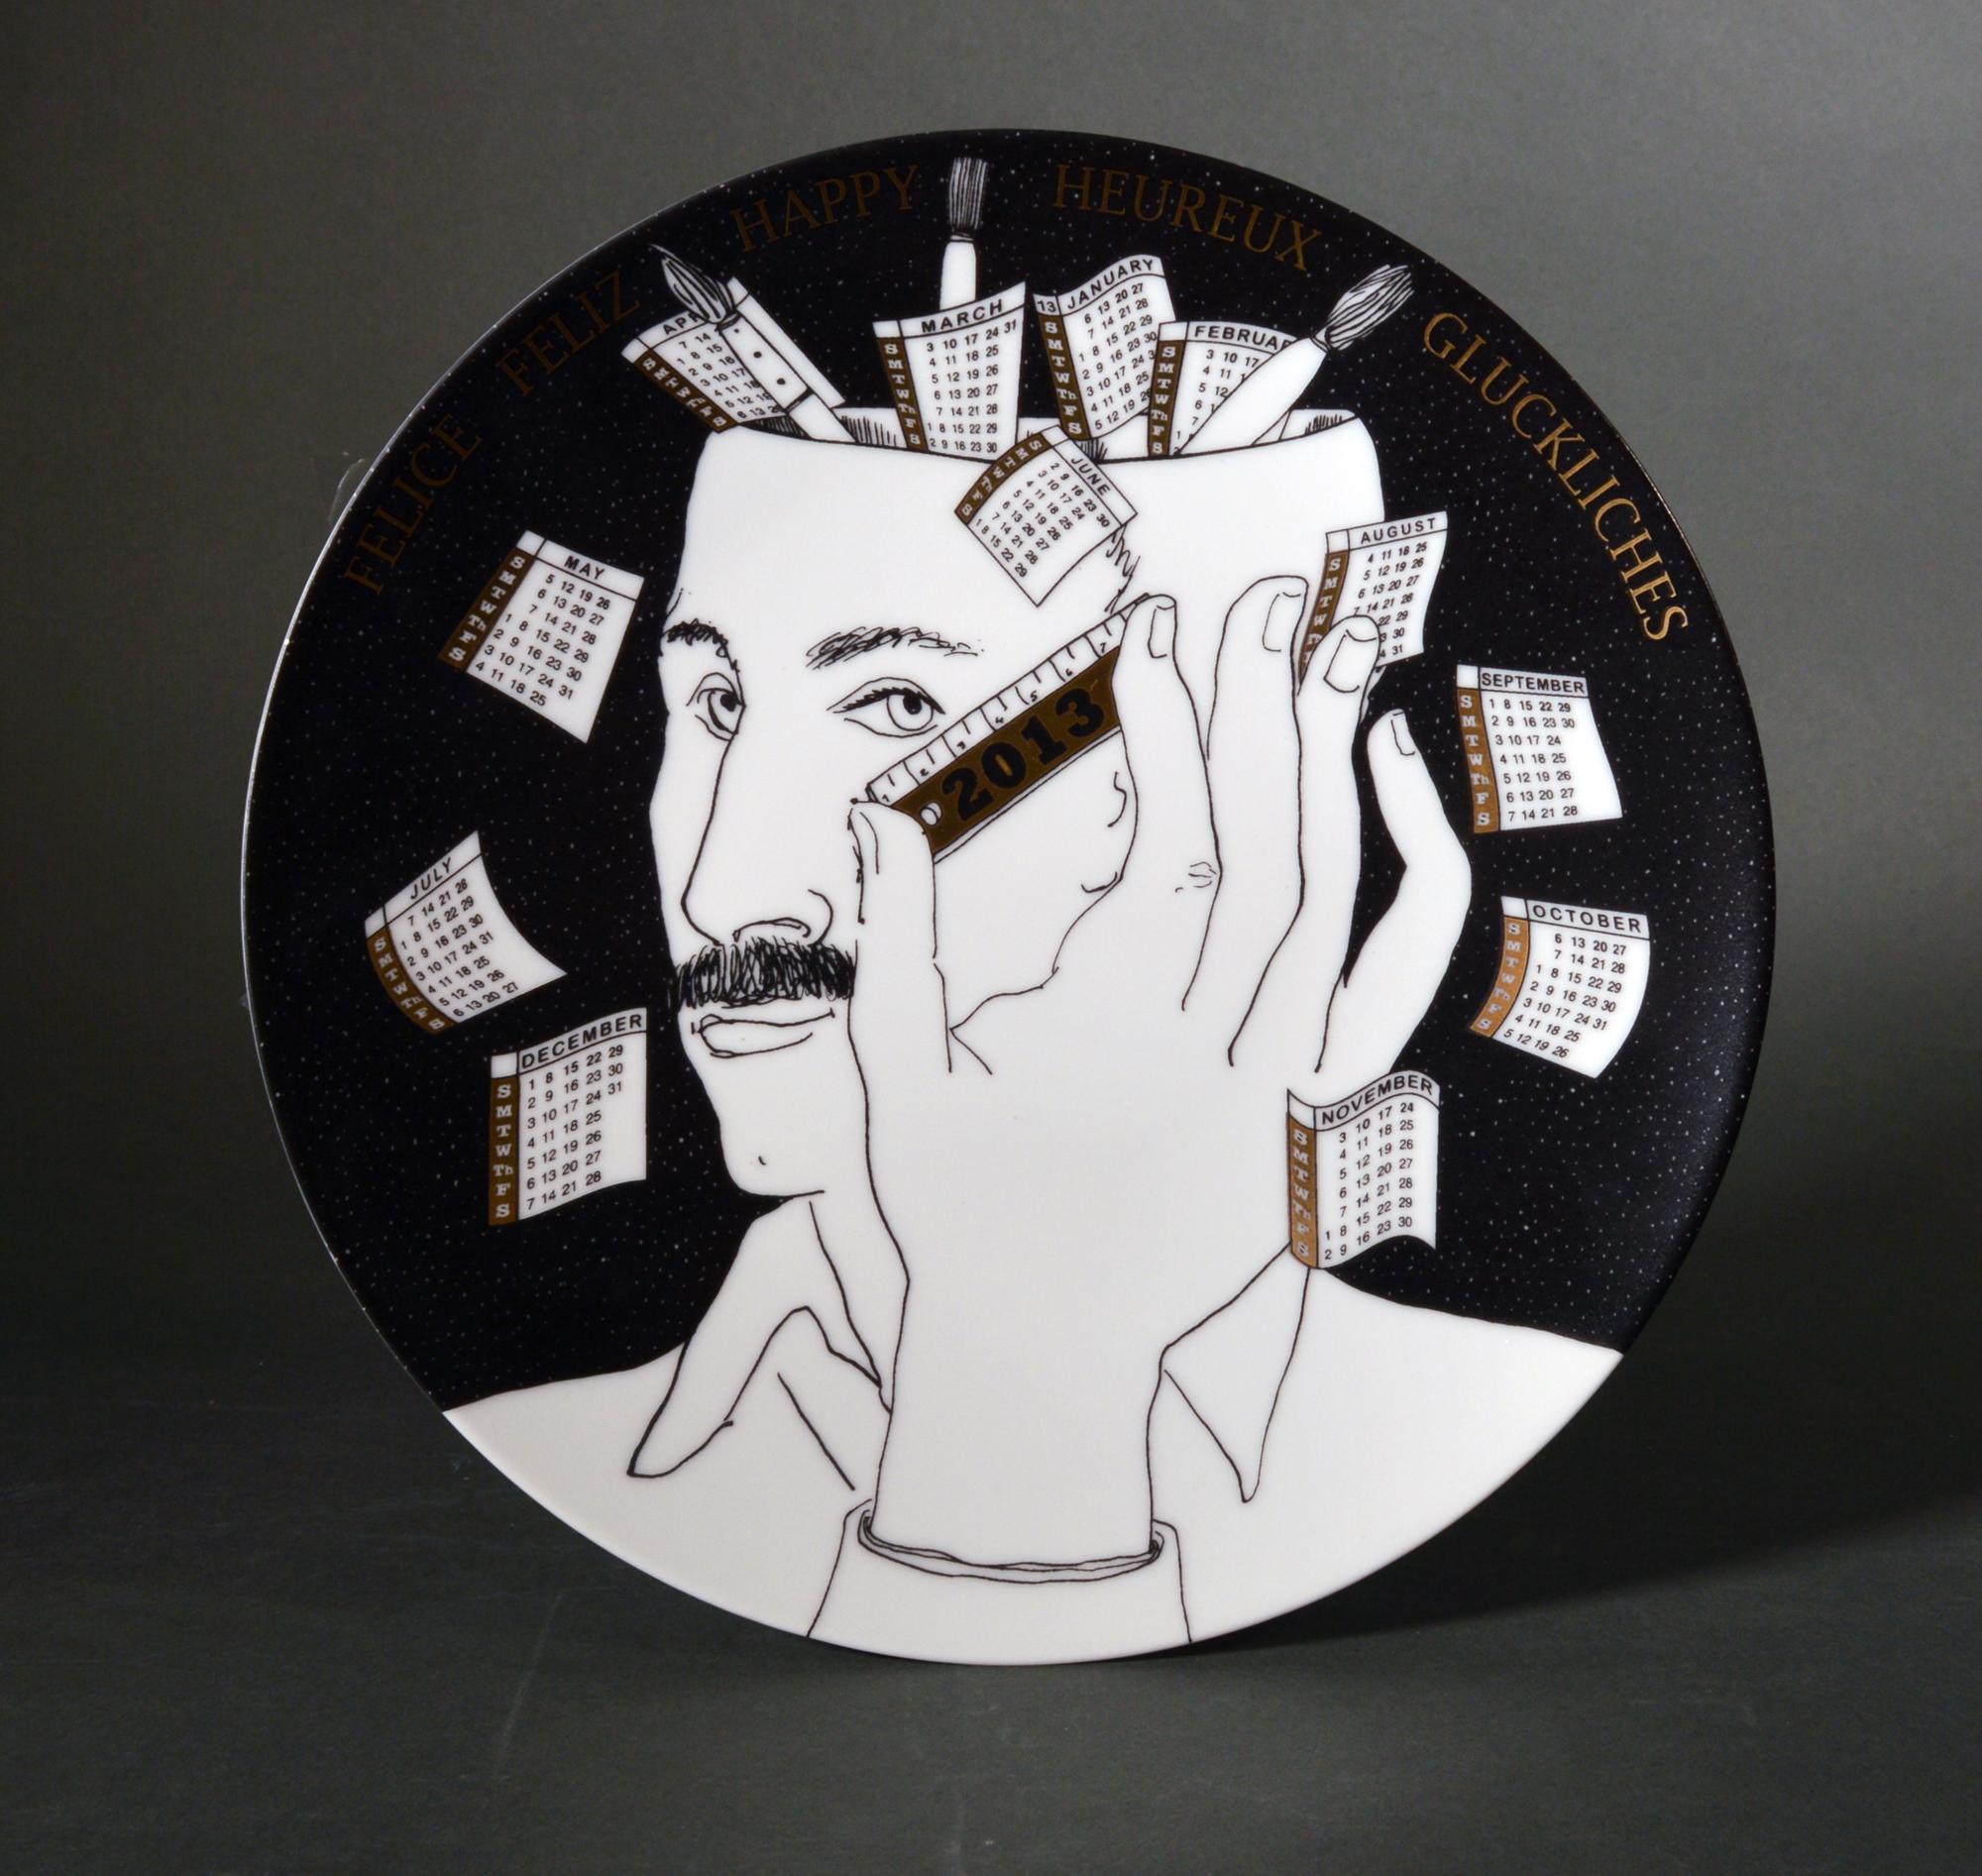 Fornasetti Porcelain Calendar Plate 2013, Self Portrait, Number 398 of 700 Made 1